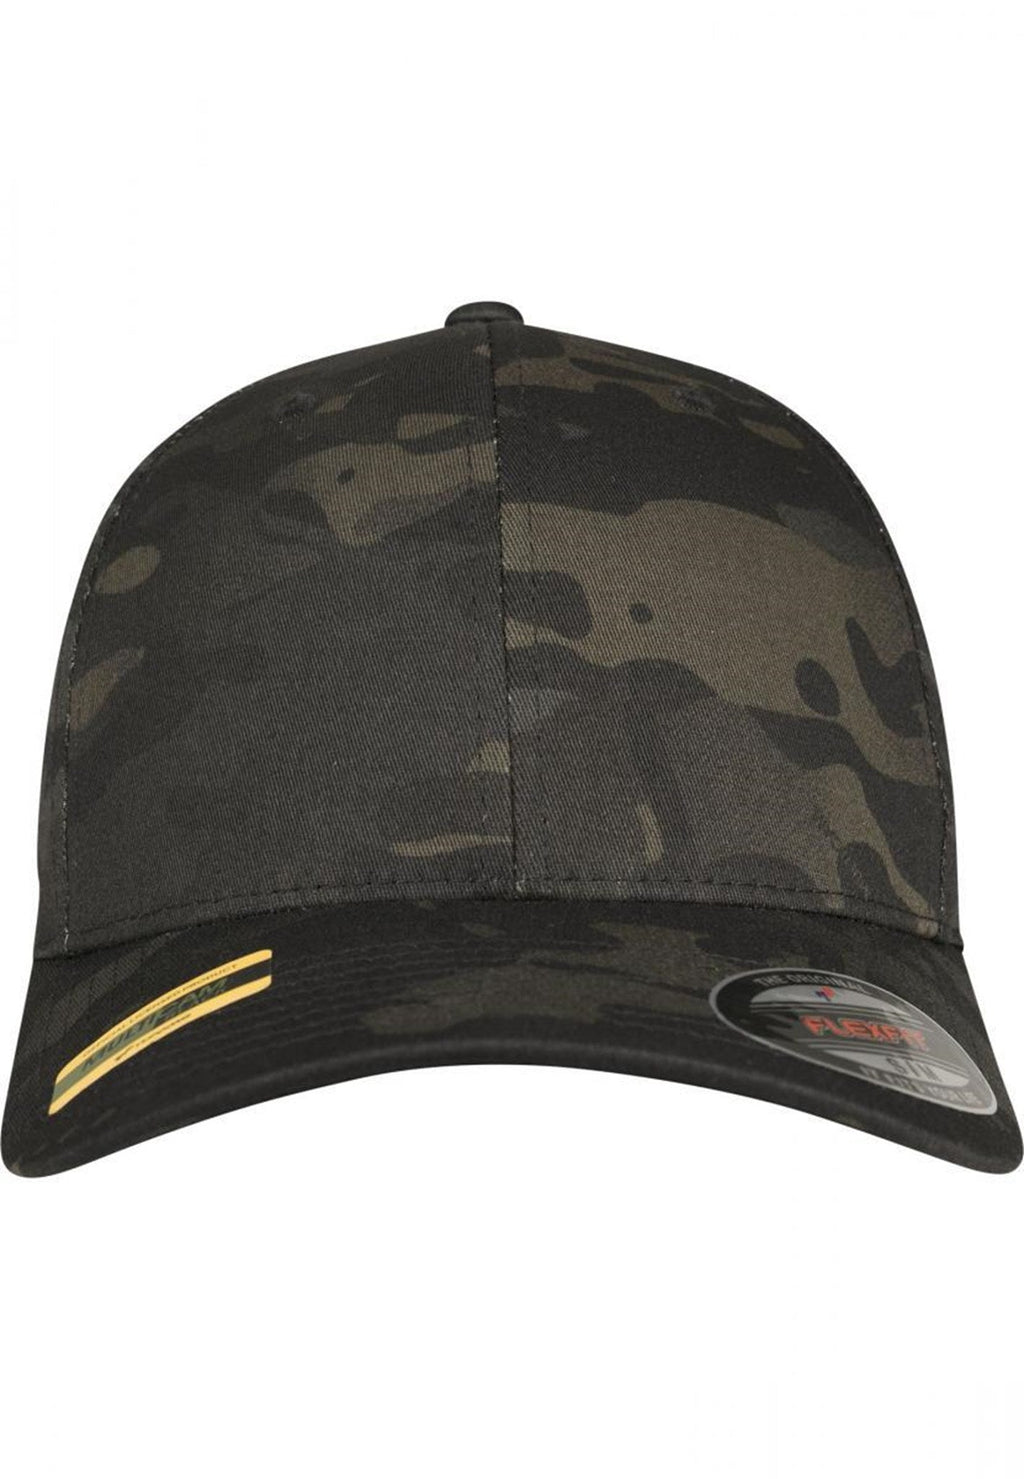 Ezoko FLEXFIT Cap | fishing hat MultiCam Black / Normal